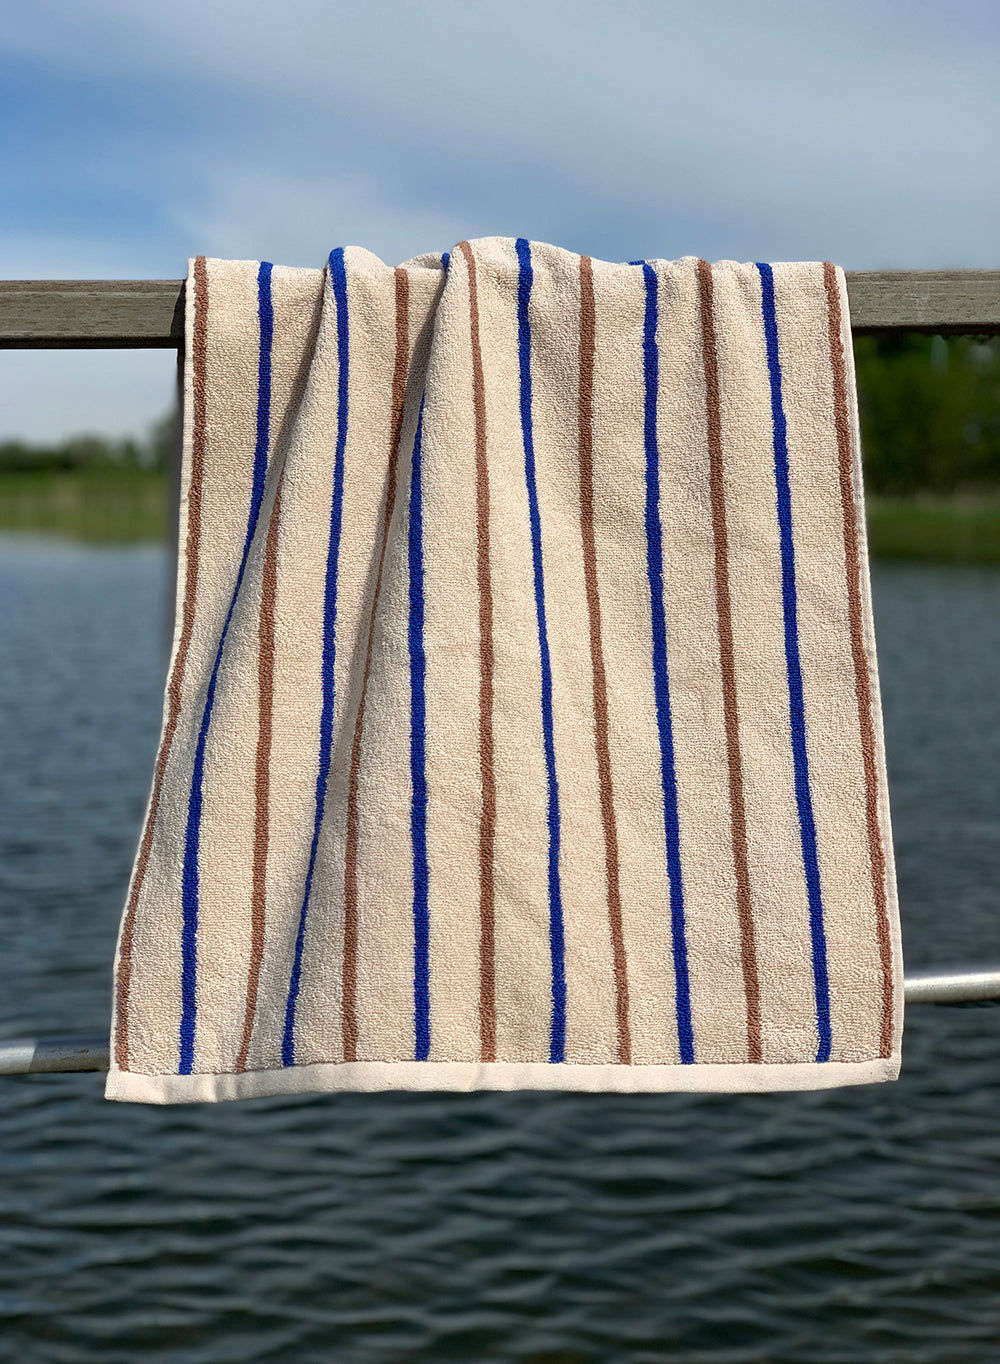 OYOY LIVING Raita Håndklæde - 40x60 cm - Caramel/Optic Blue